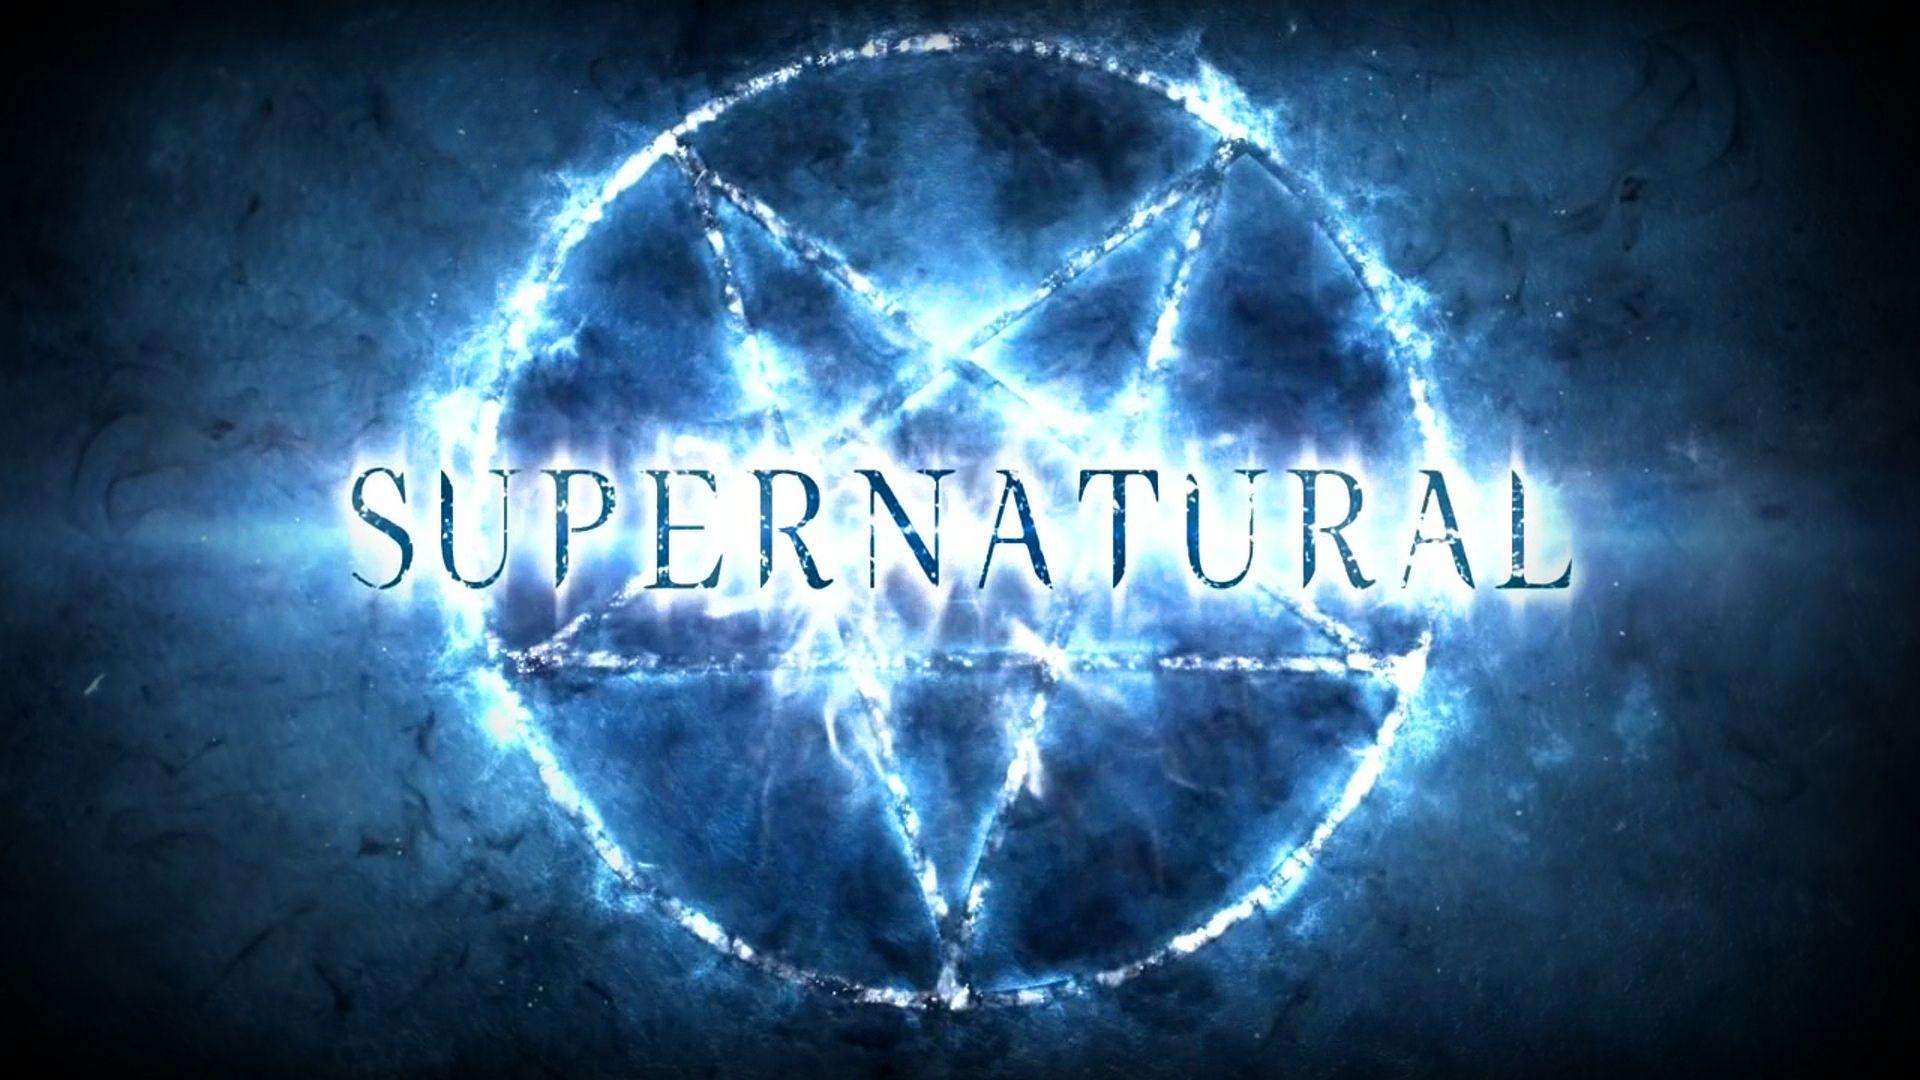 Season 10. Supernatural, Supernatural season 10 and Supernatural